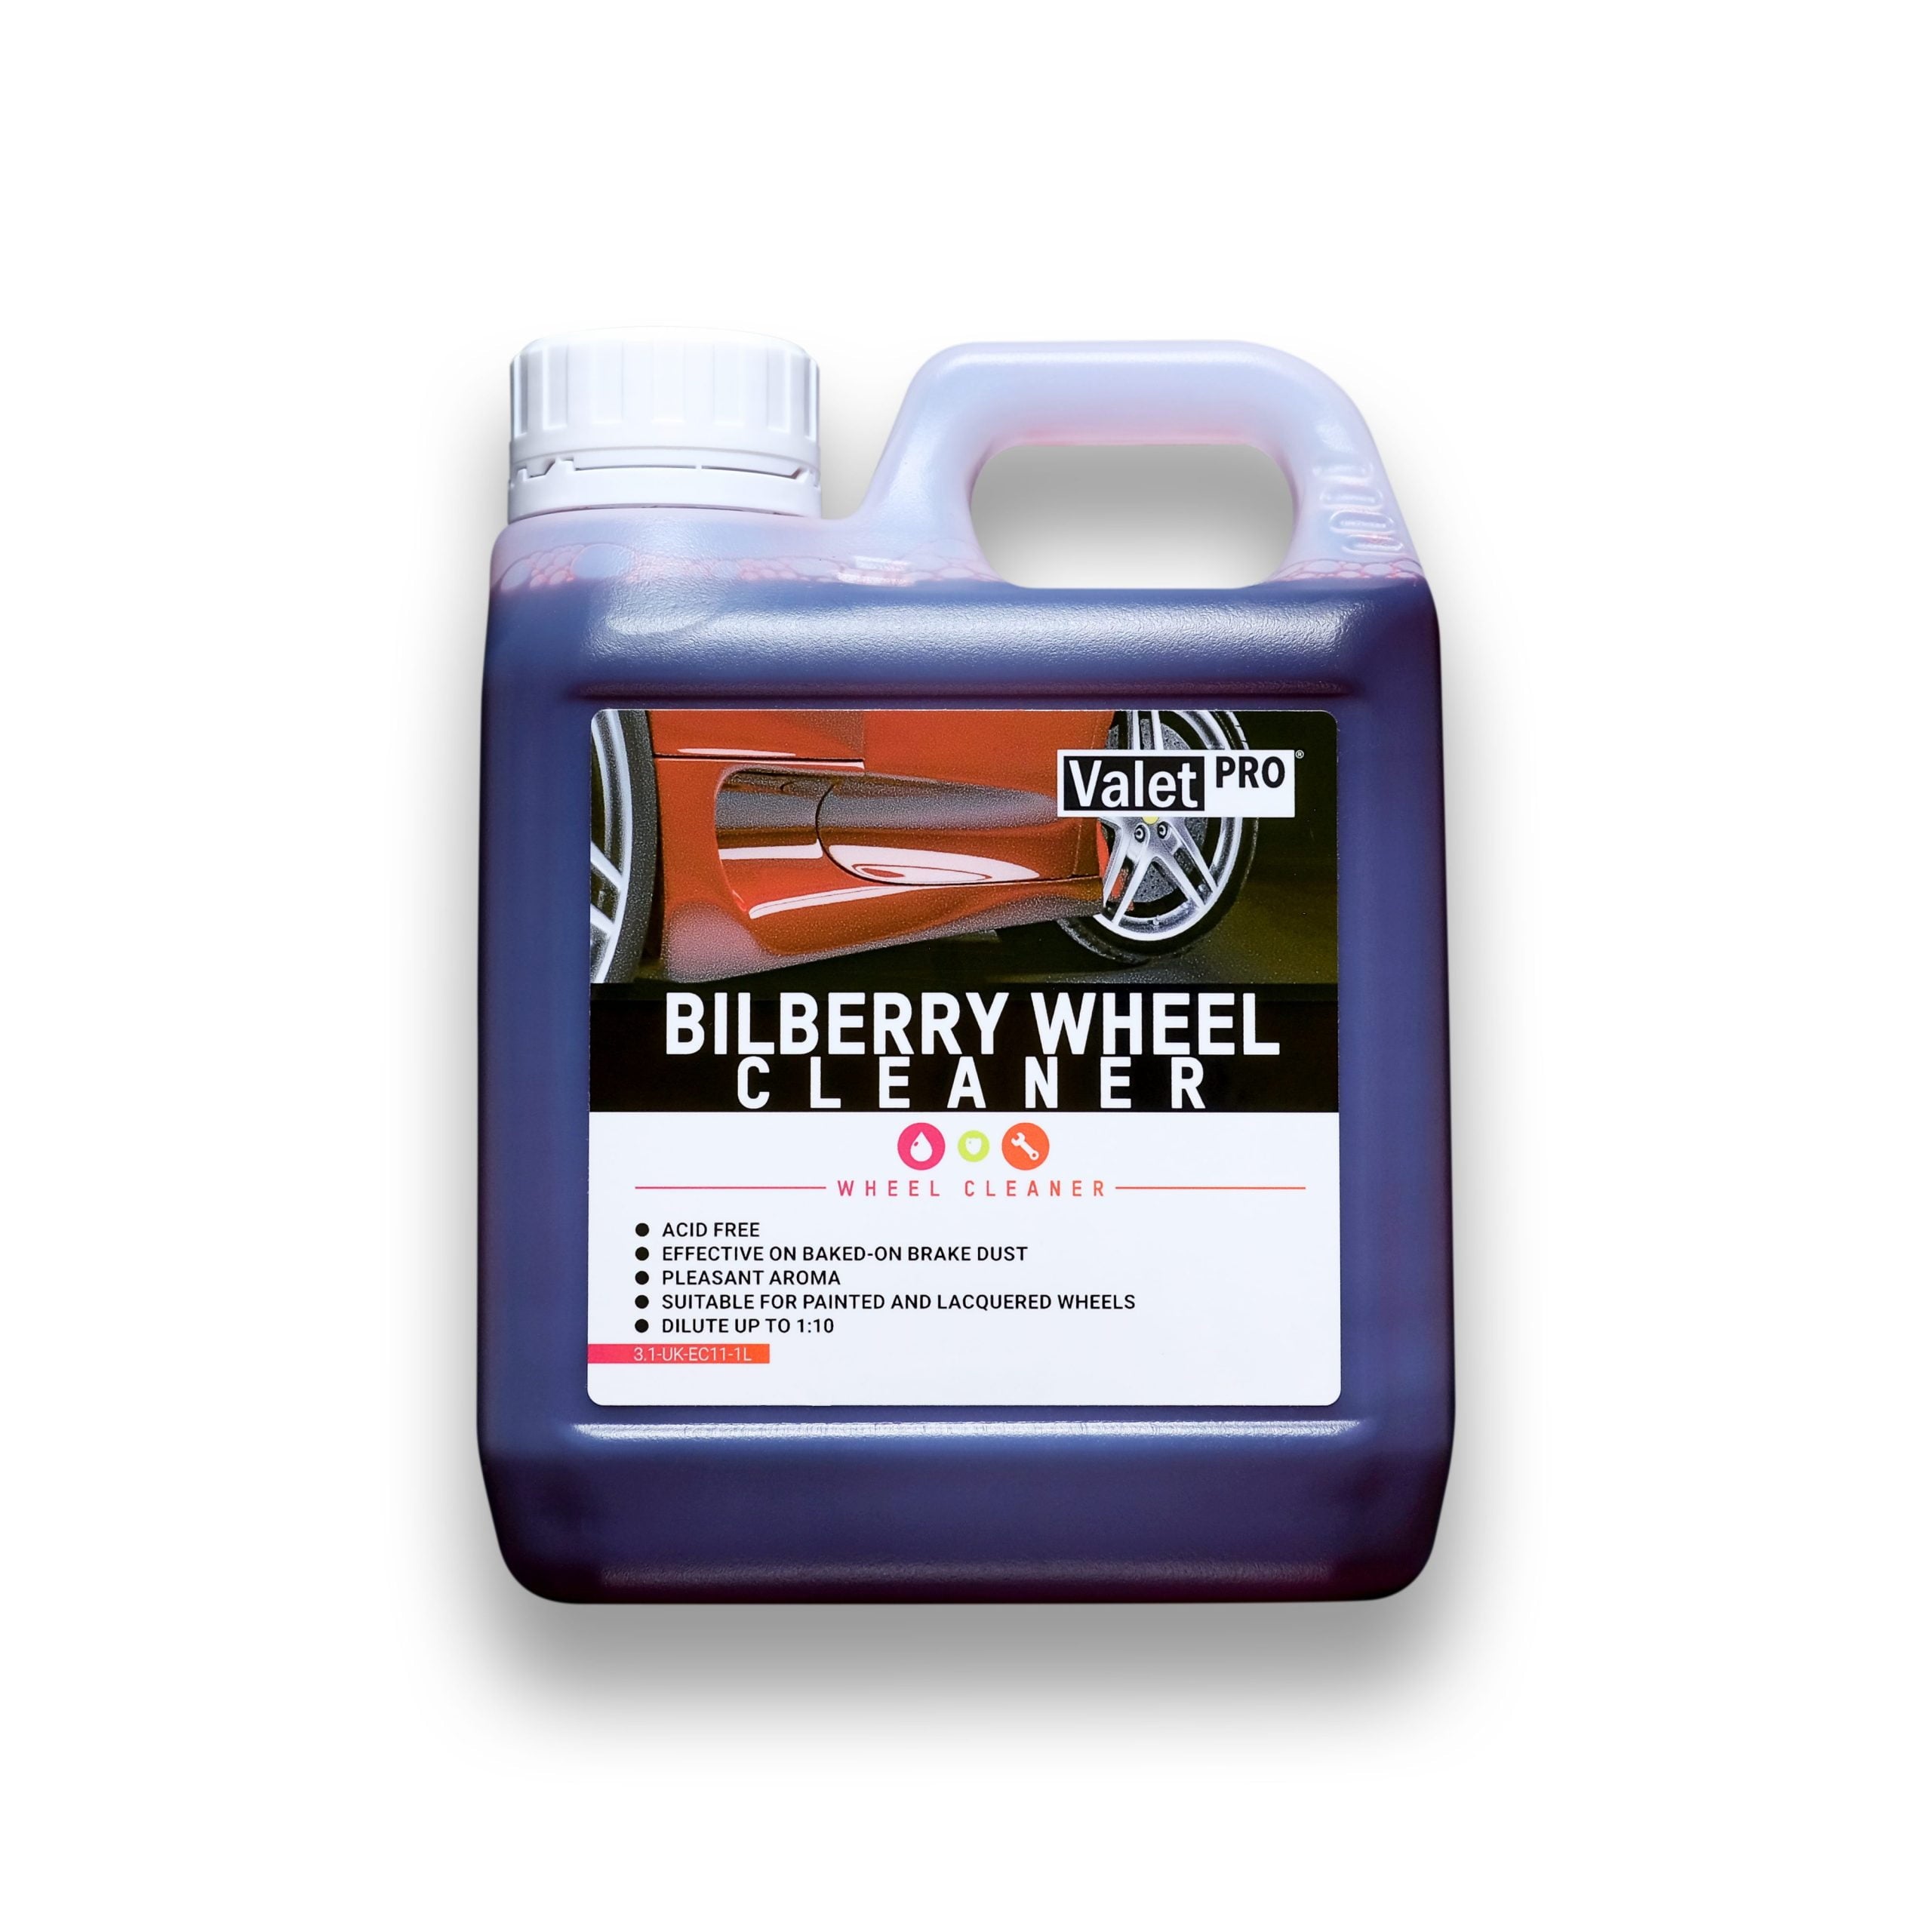 ValetPro Bilberry Wheel Cleaner